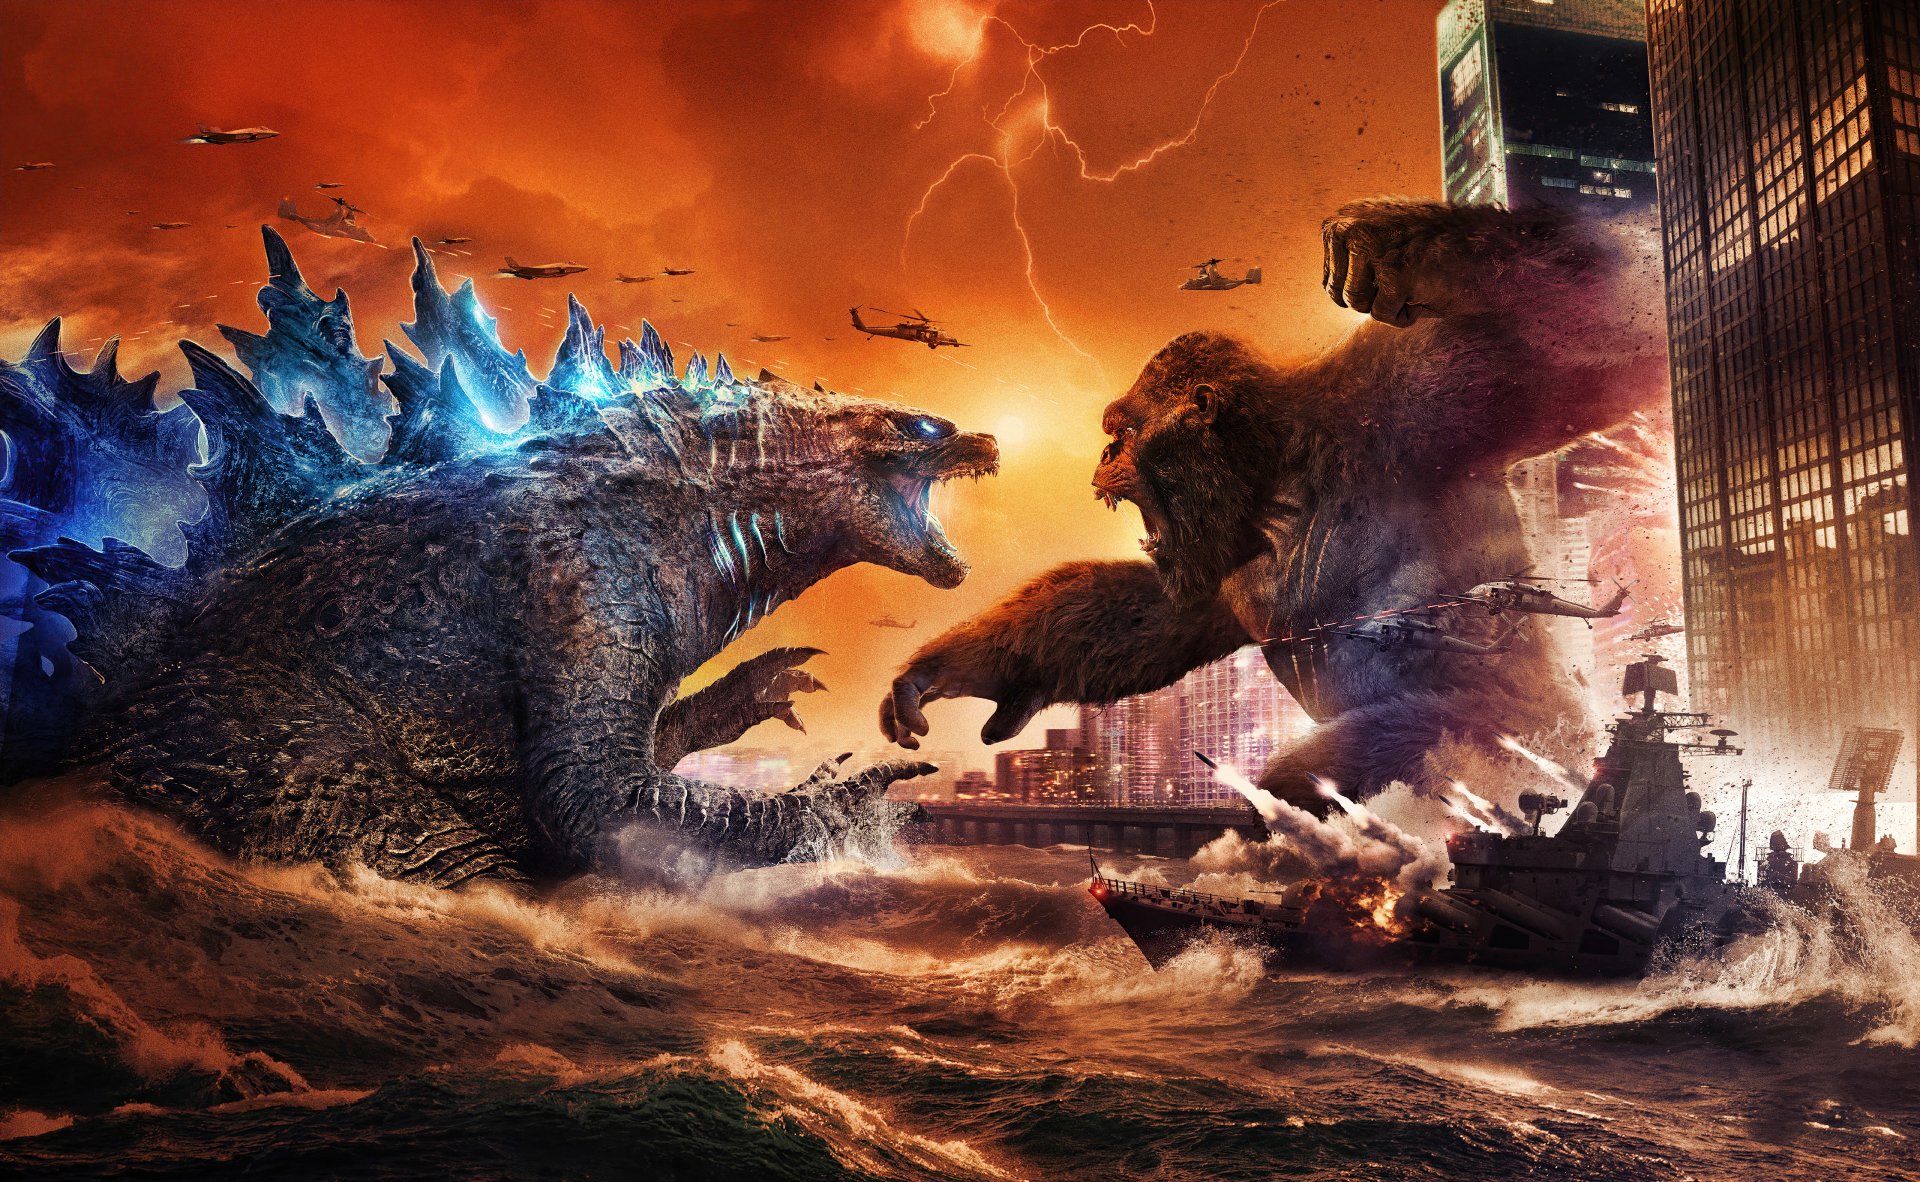 Godzilla vs kong yangi imperiya. King против Годзилла Конга 2021. Годзилла против Конга Godzilla vs. Kong. Конг против Годзиллы 2021.